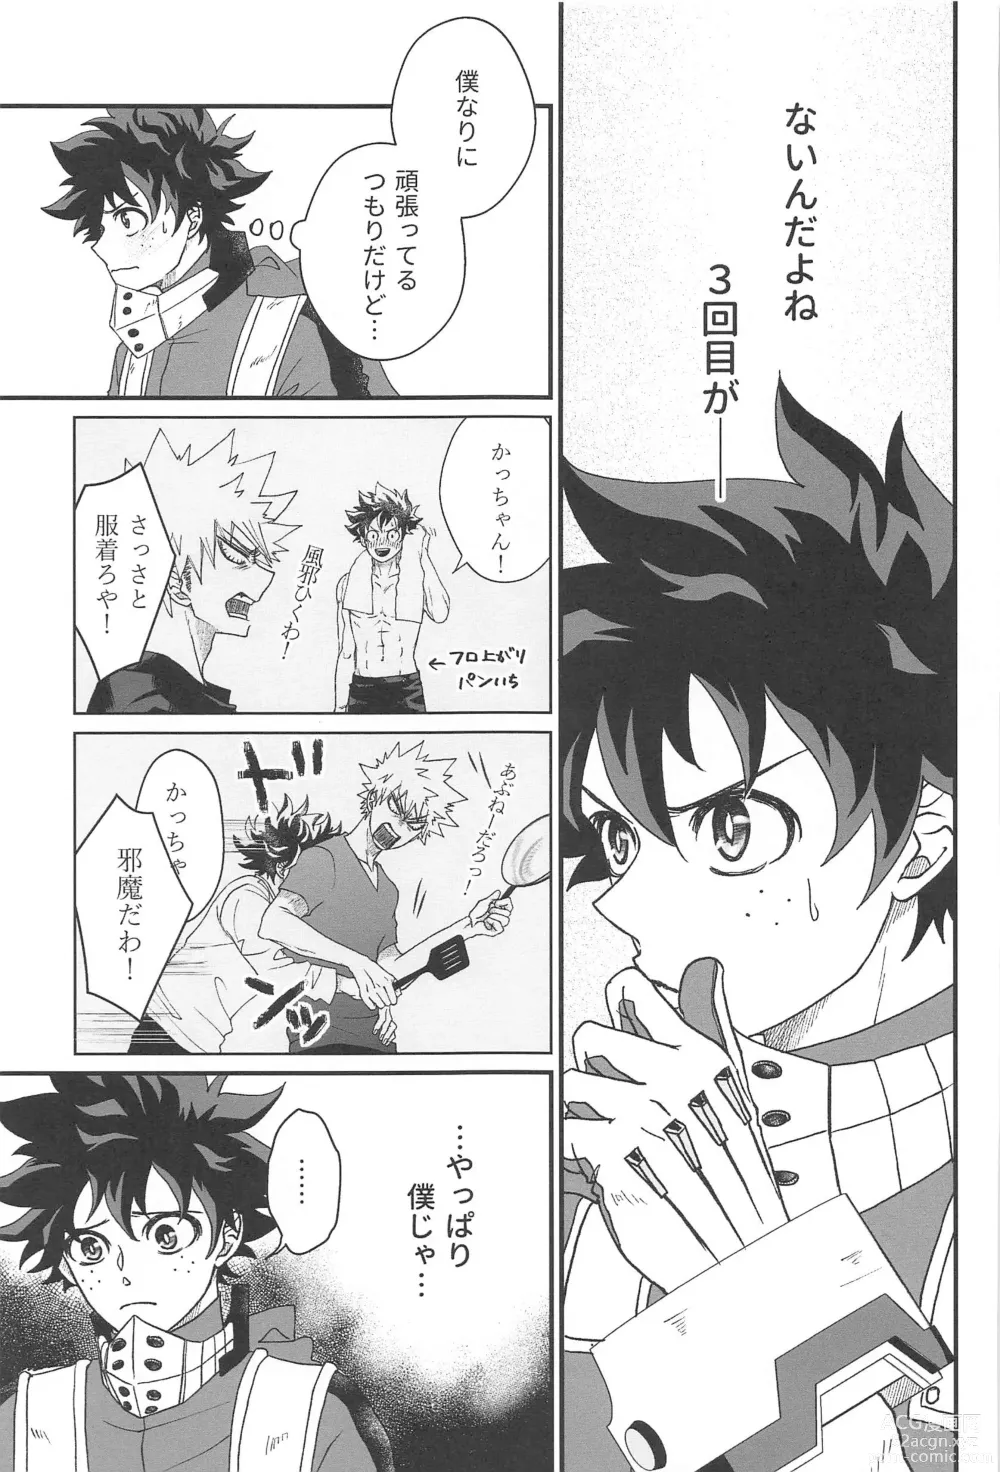 Page 8 of doujinshi 0.01